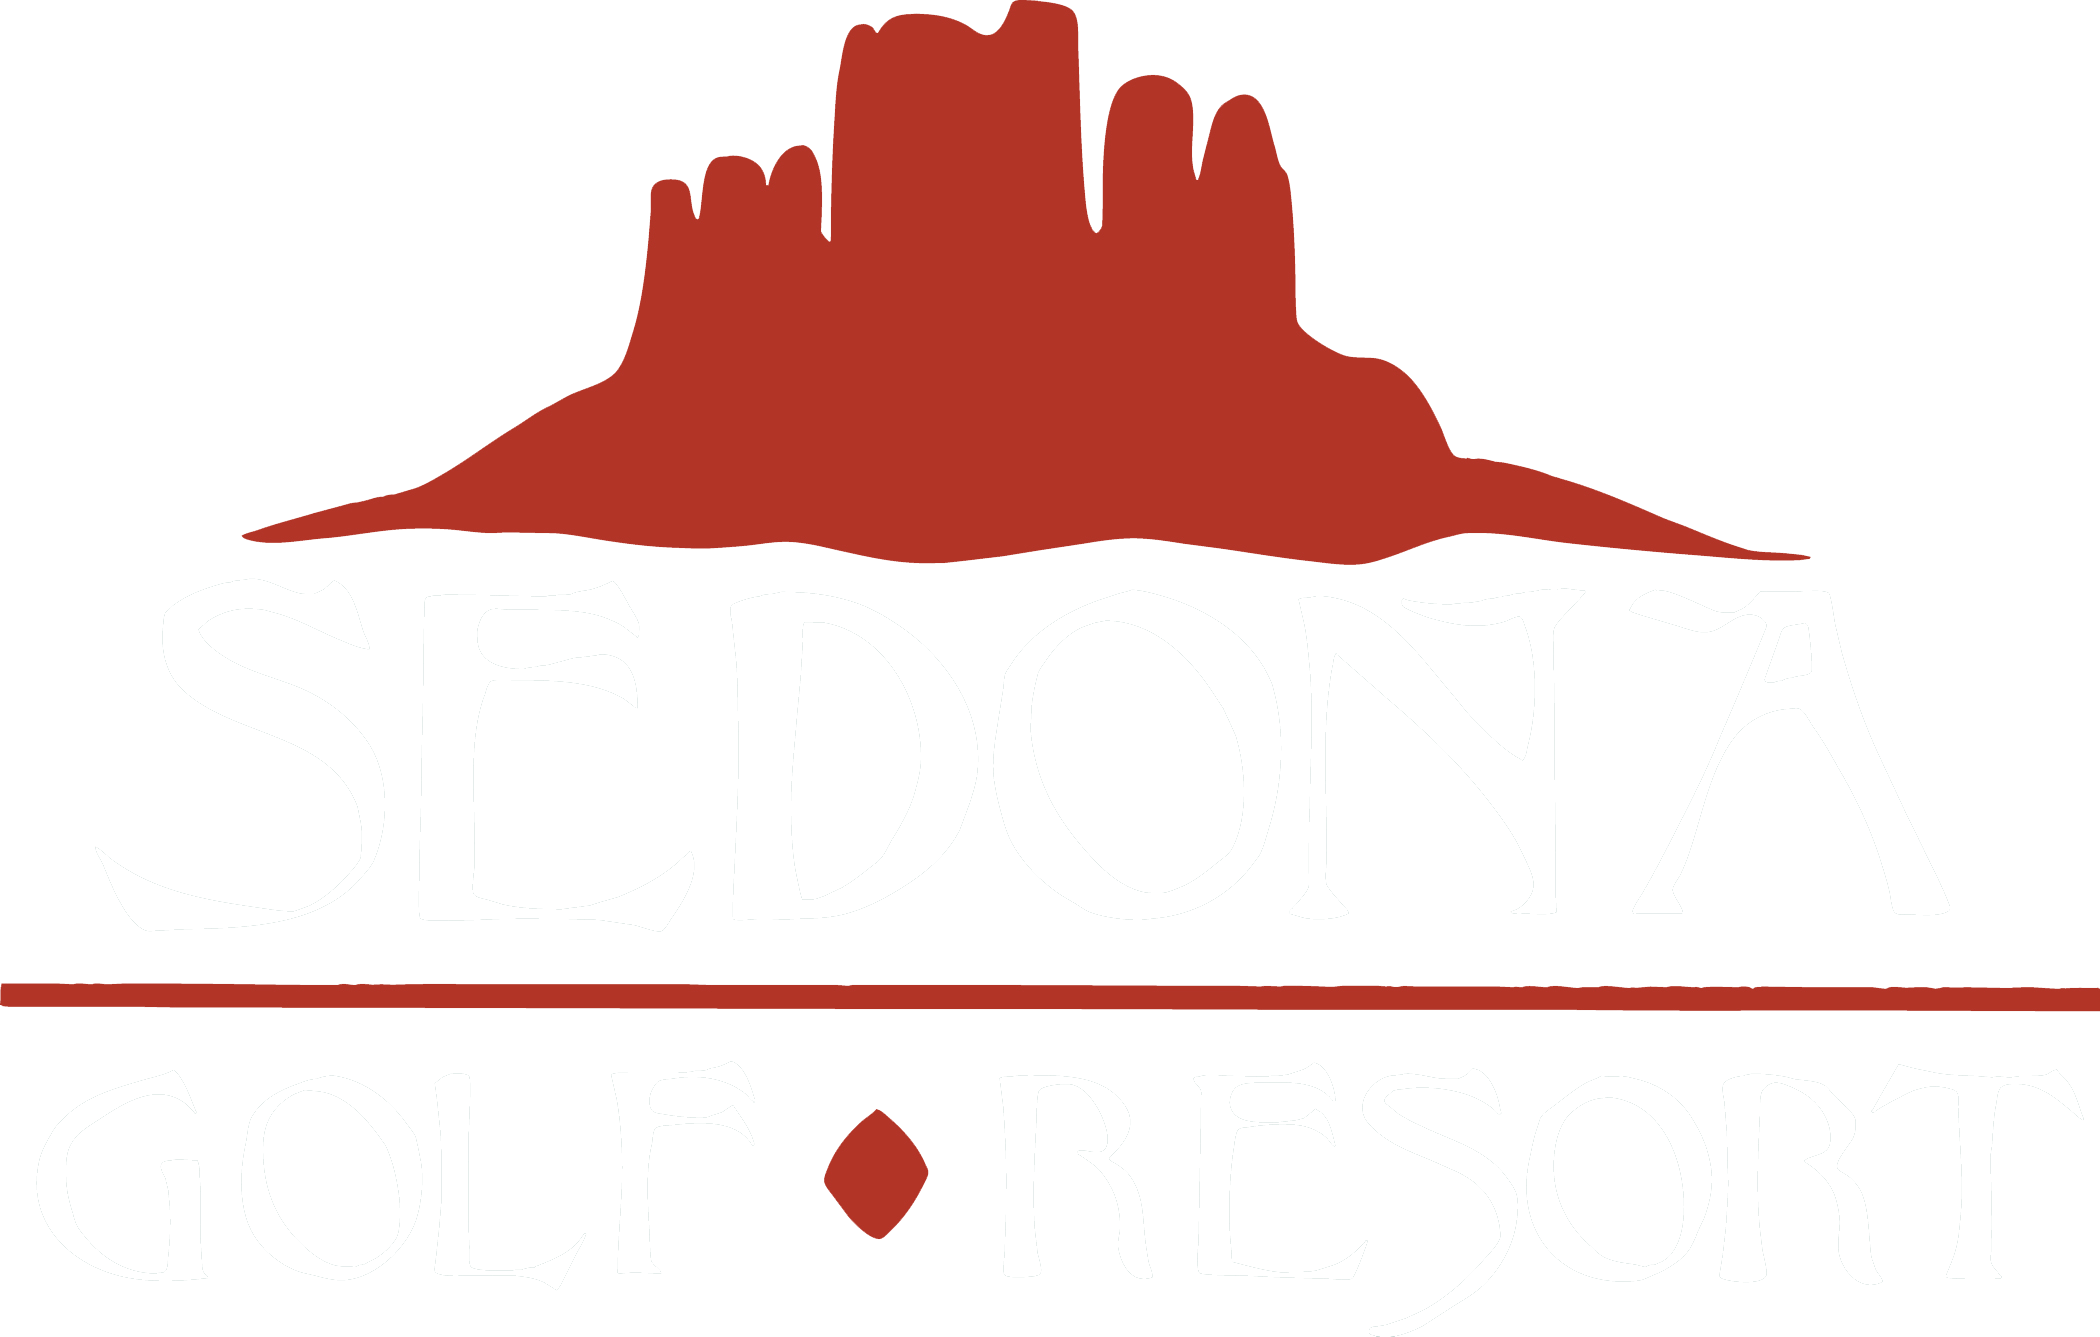 Arizona Red Rocks Logo - Sedona Golf Resort. Arizona Golf Course and Resort